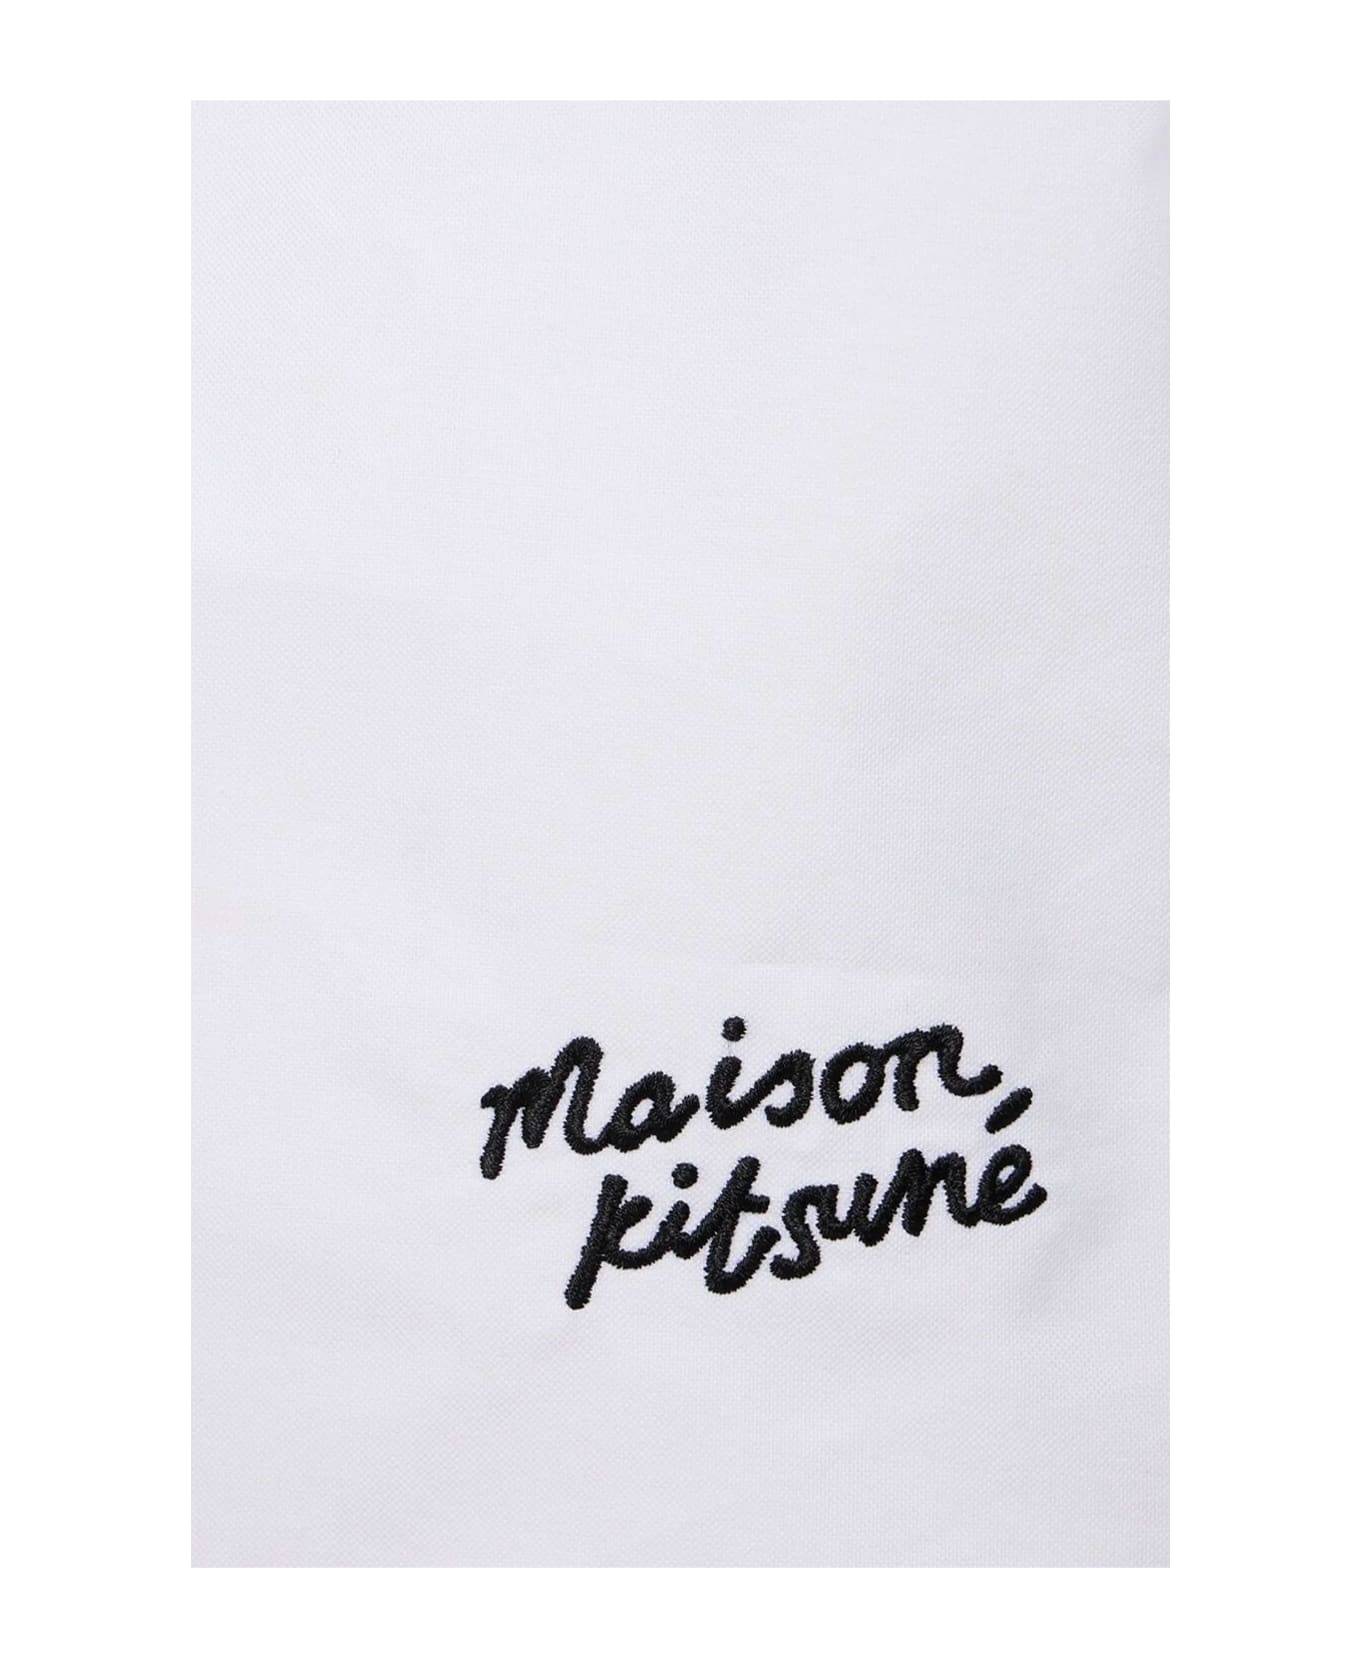 Maison Kitsuné Handwritting Casual Bd Shirt White cotton long sleeves shirt with logo embroidery - Handwriting Casual BD Shirt - Bianco